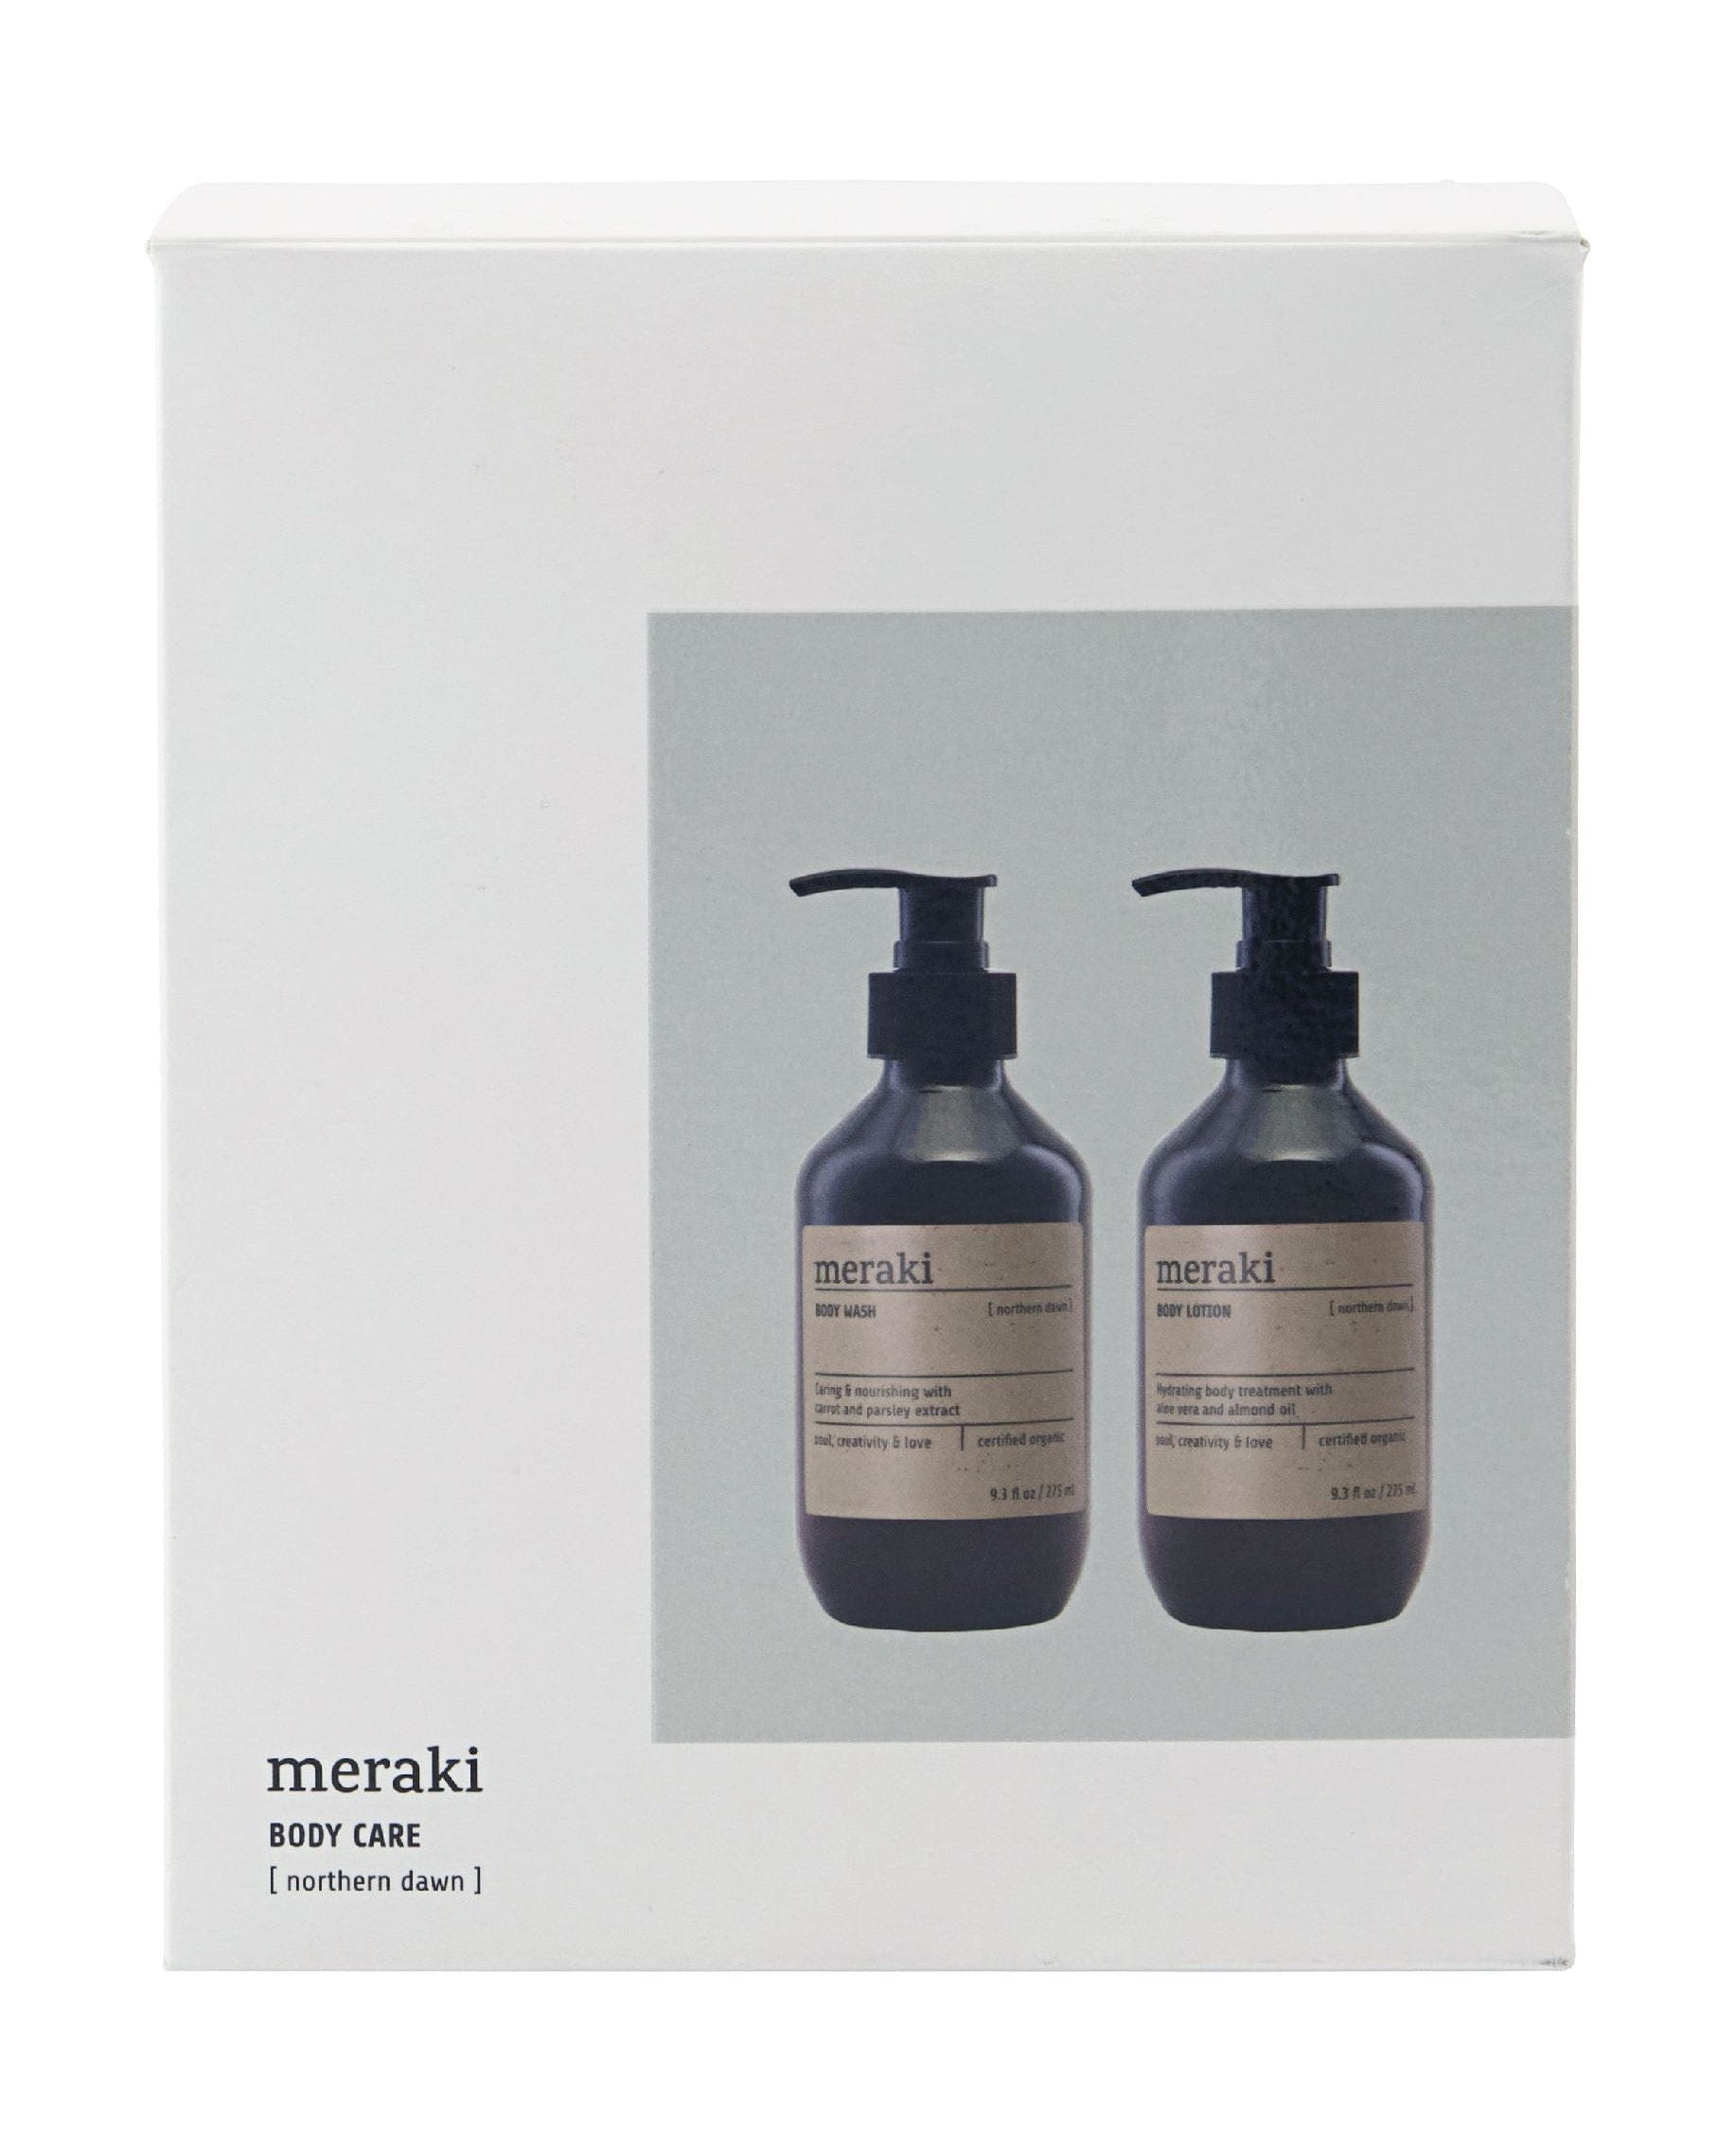 Meraki Body Care Present Box 275/275 ml, Northern Dawn